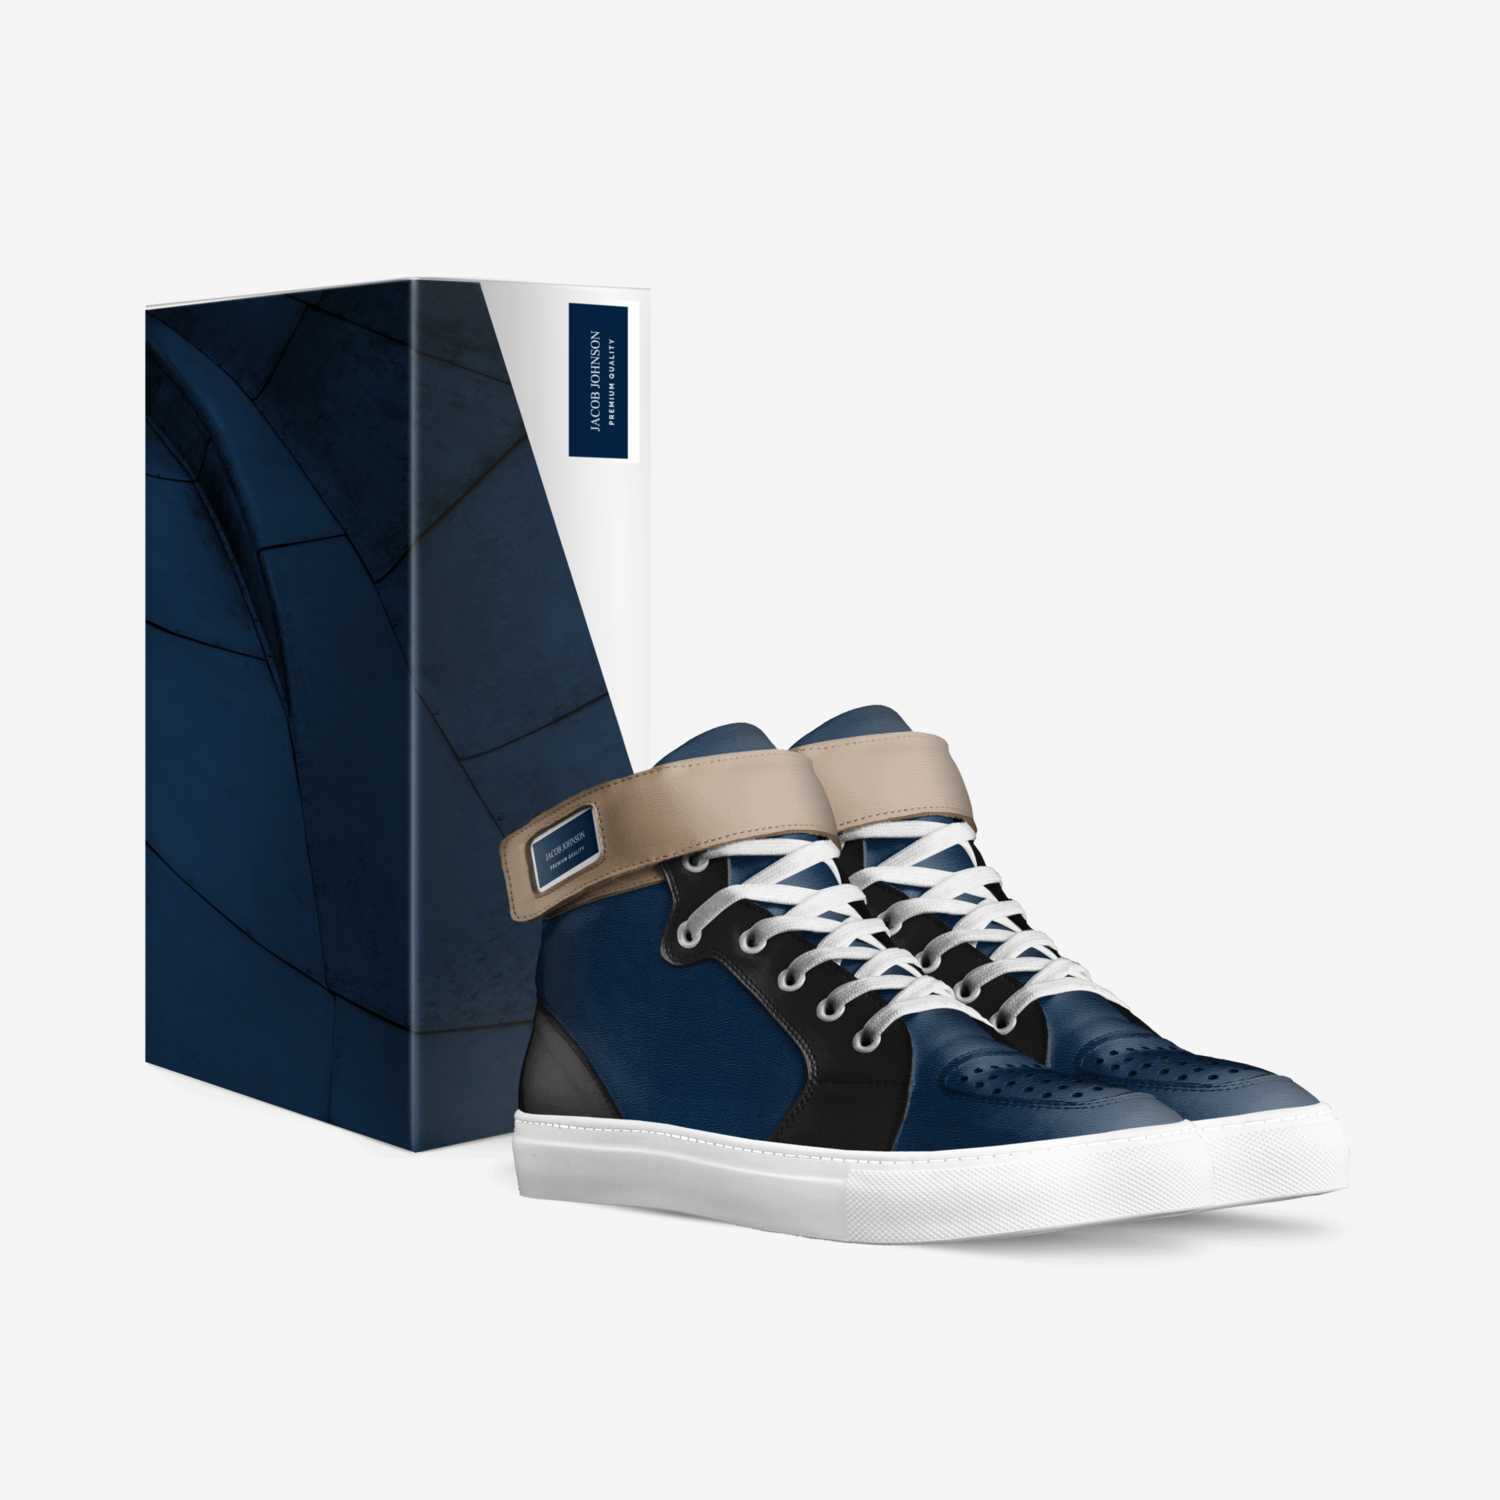 Jacob Johnson custom made in Italy shoes by Jasper van Den Berge | Box view